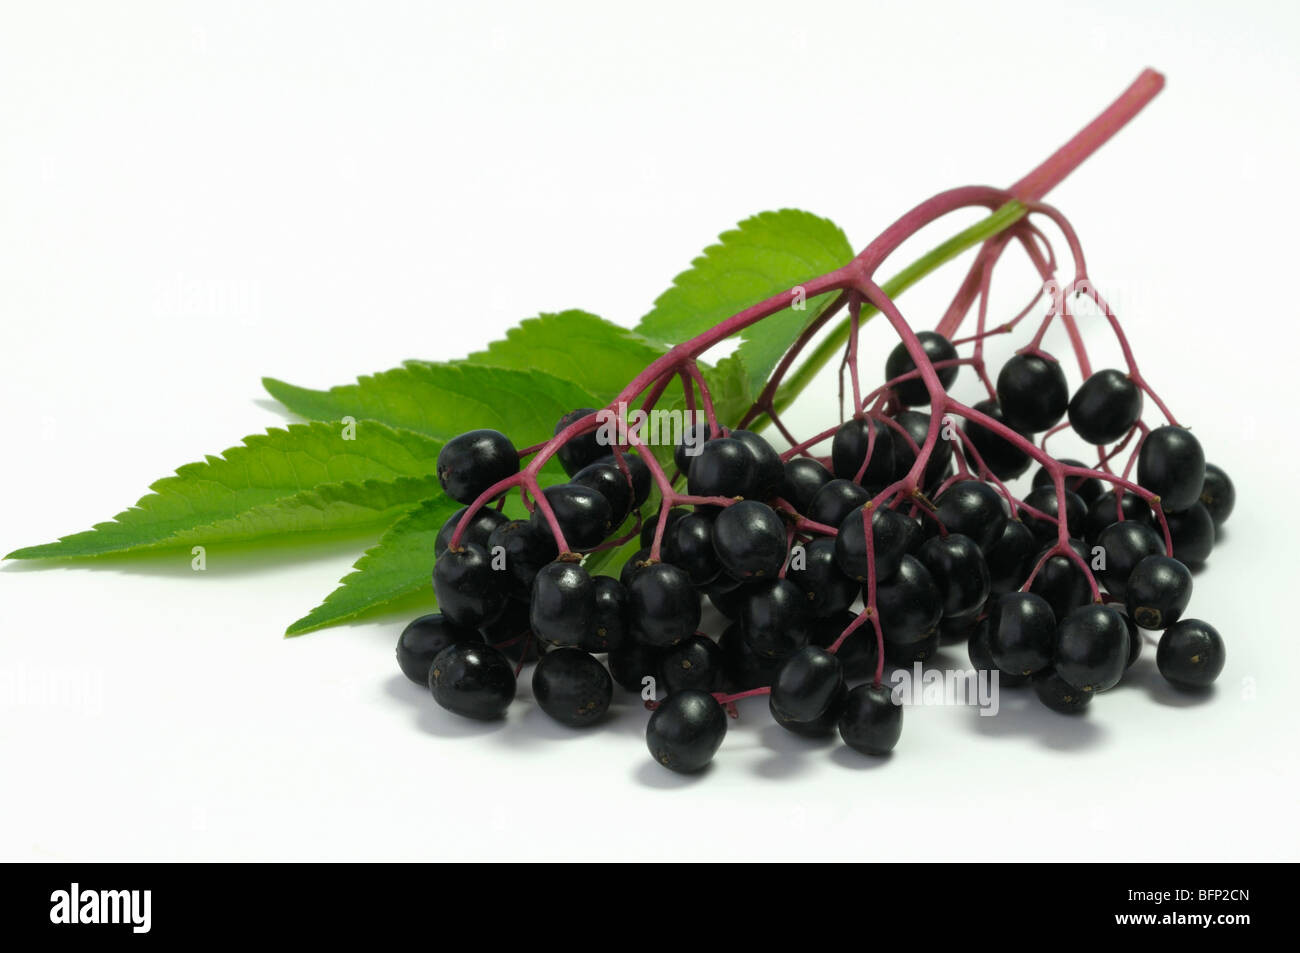 Black Elder, Elderberry (Sambucus nigra). Twig with ripe berries and leaves, studio picture. Stock Photo